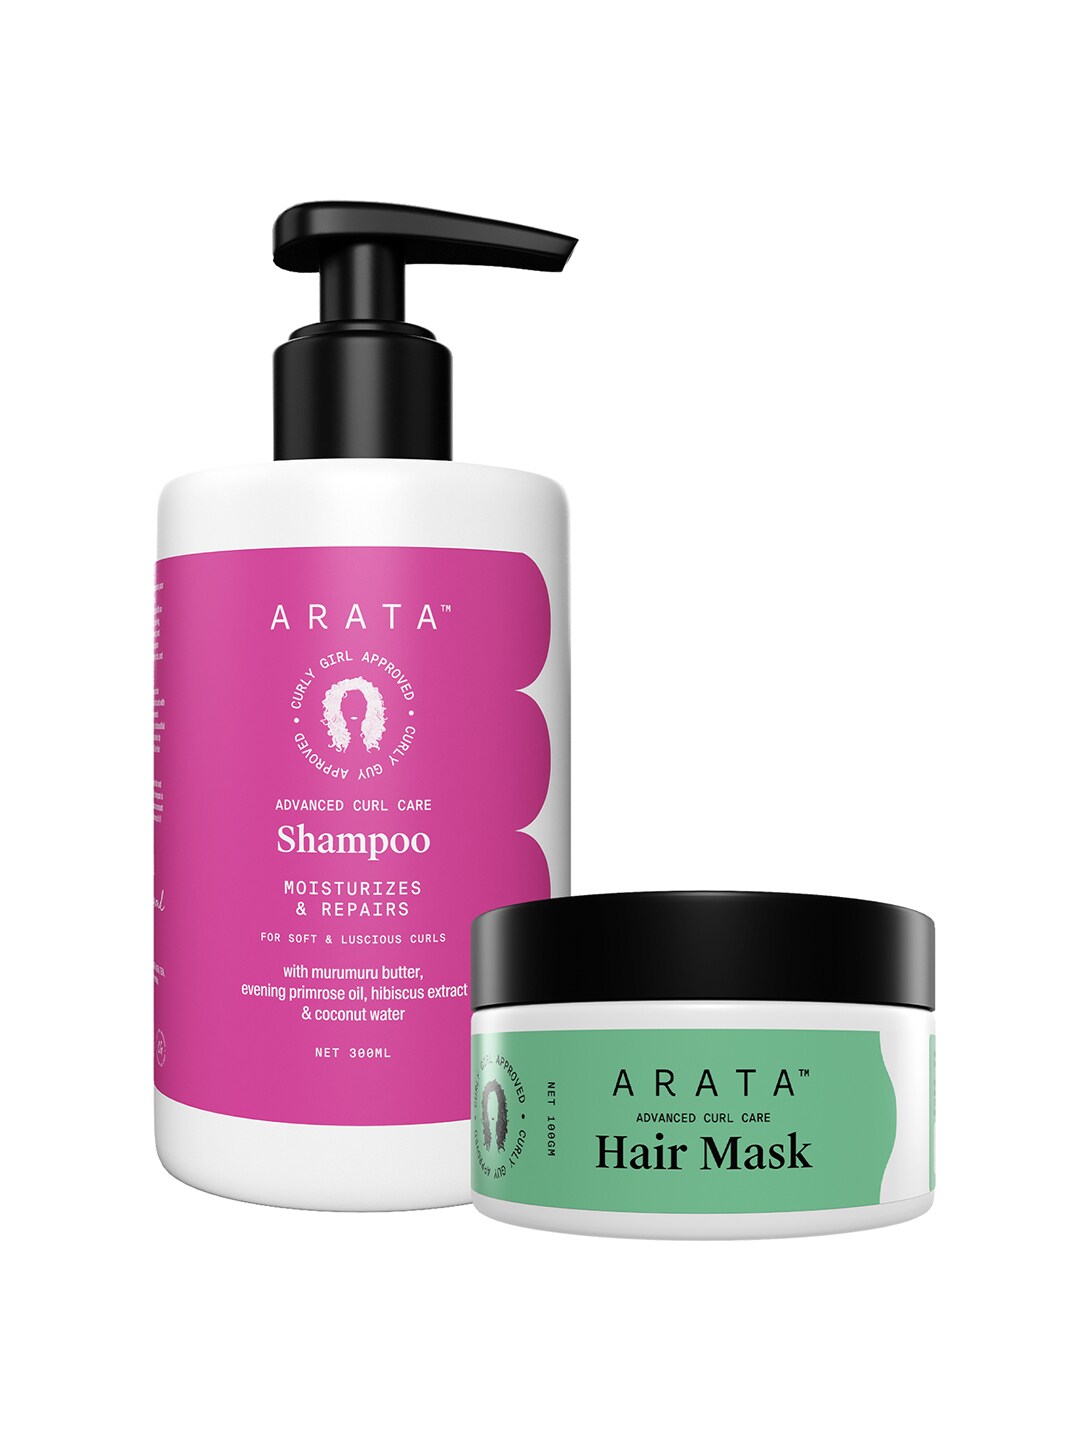 ARATA Set of Advanced Curl Care Vegan Detox Shampoo & Hair Mask Price in India